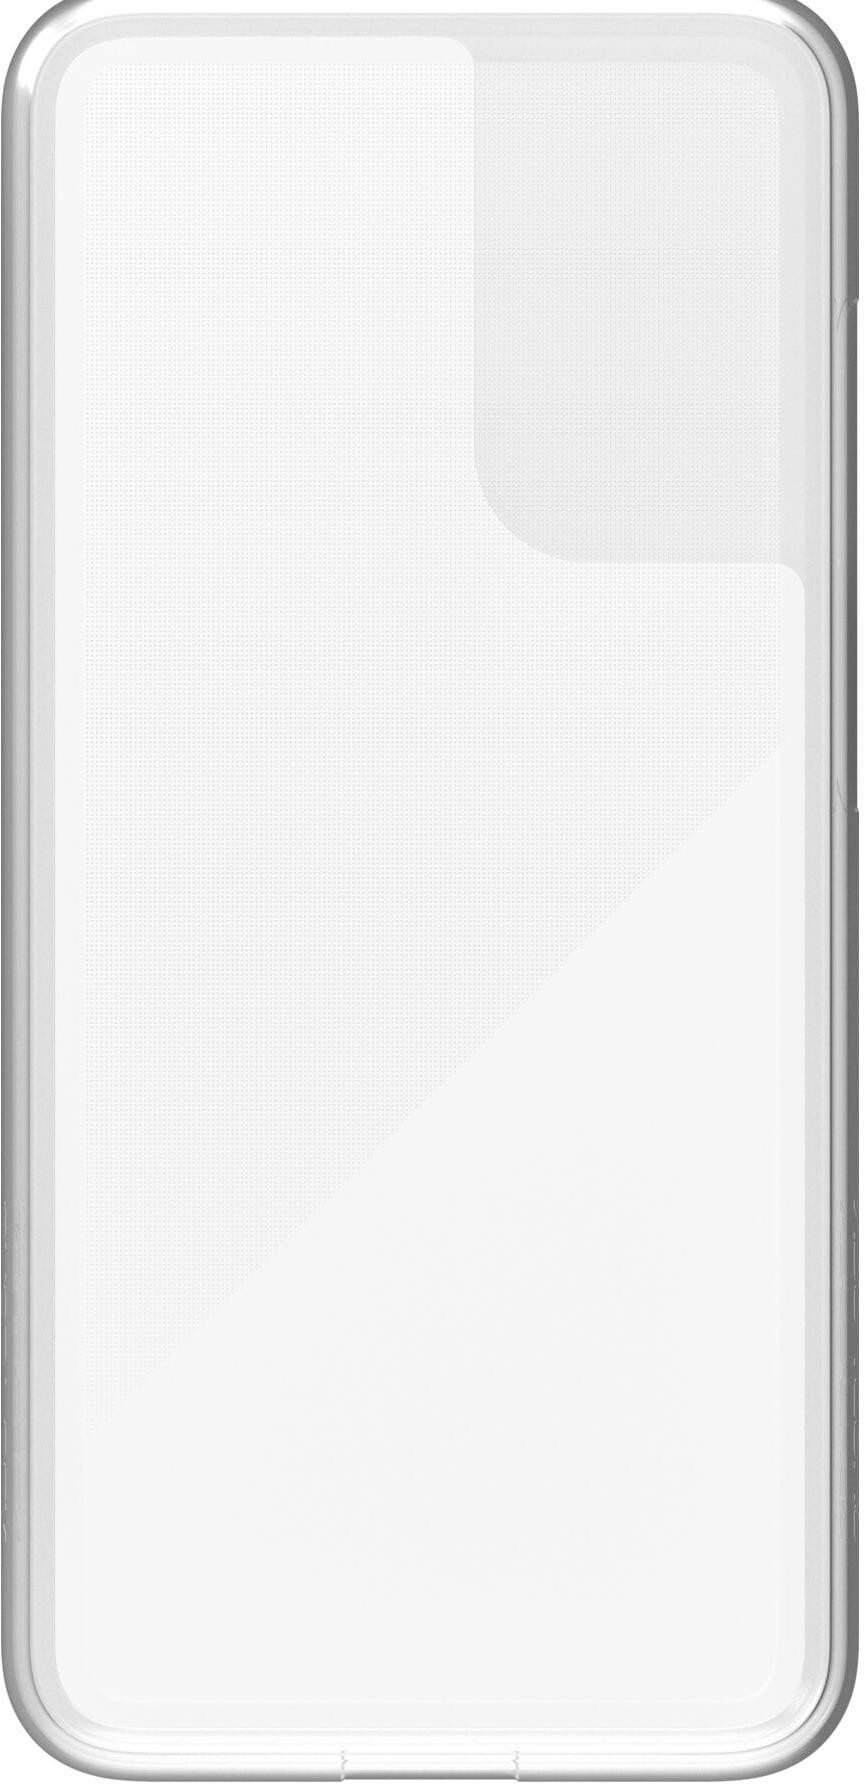 Poncho - Samsung Galaxy S20 image 0